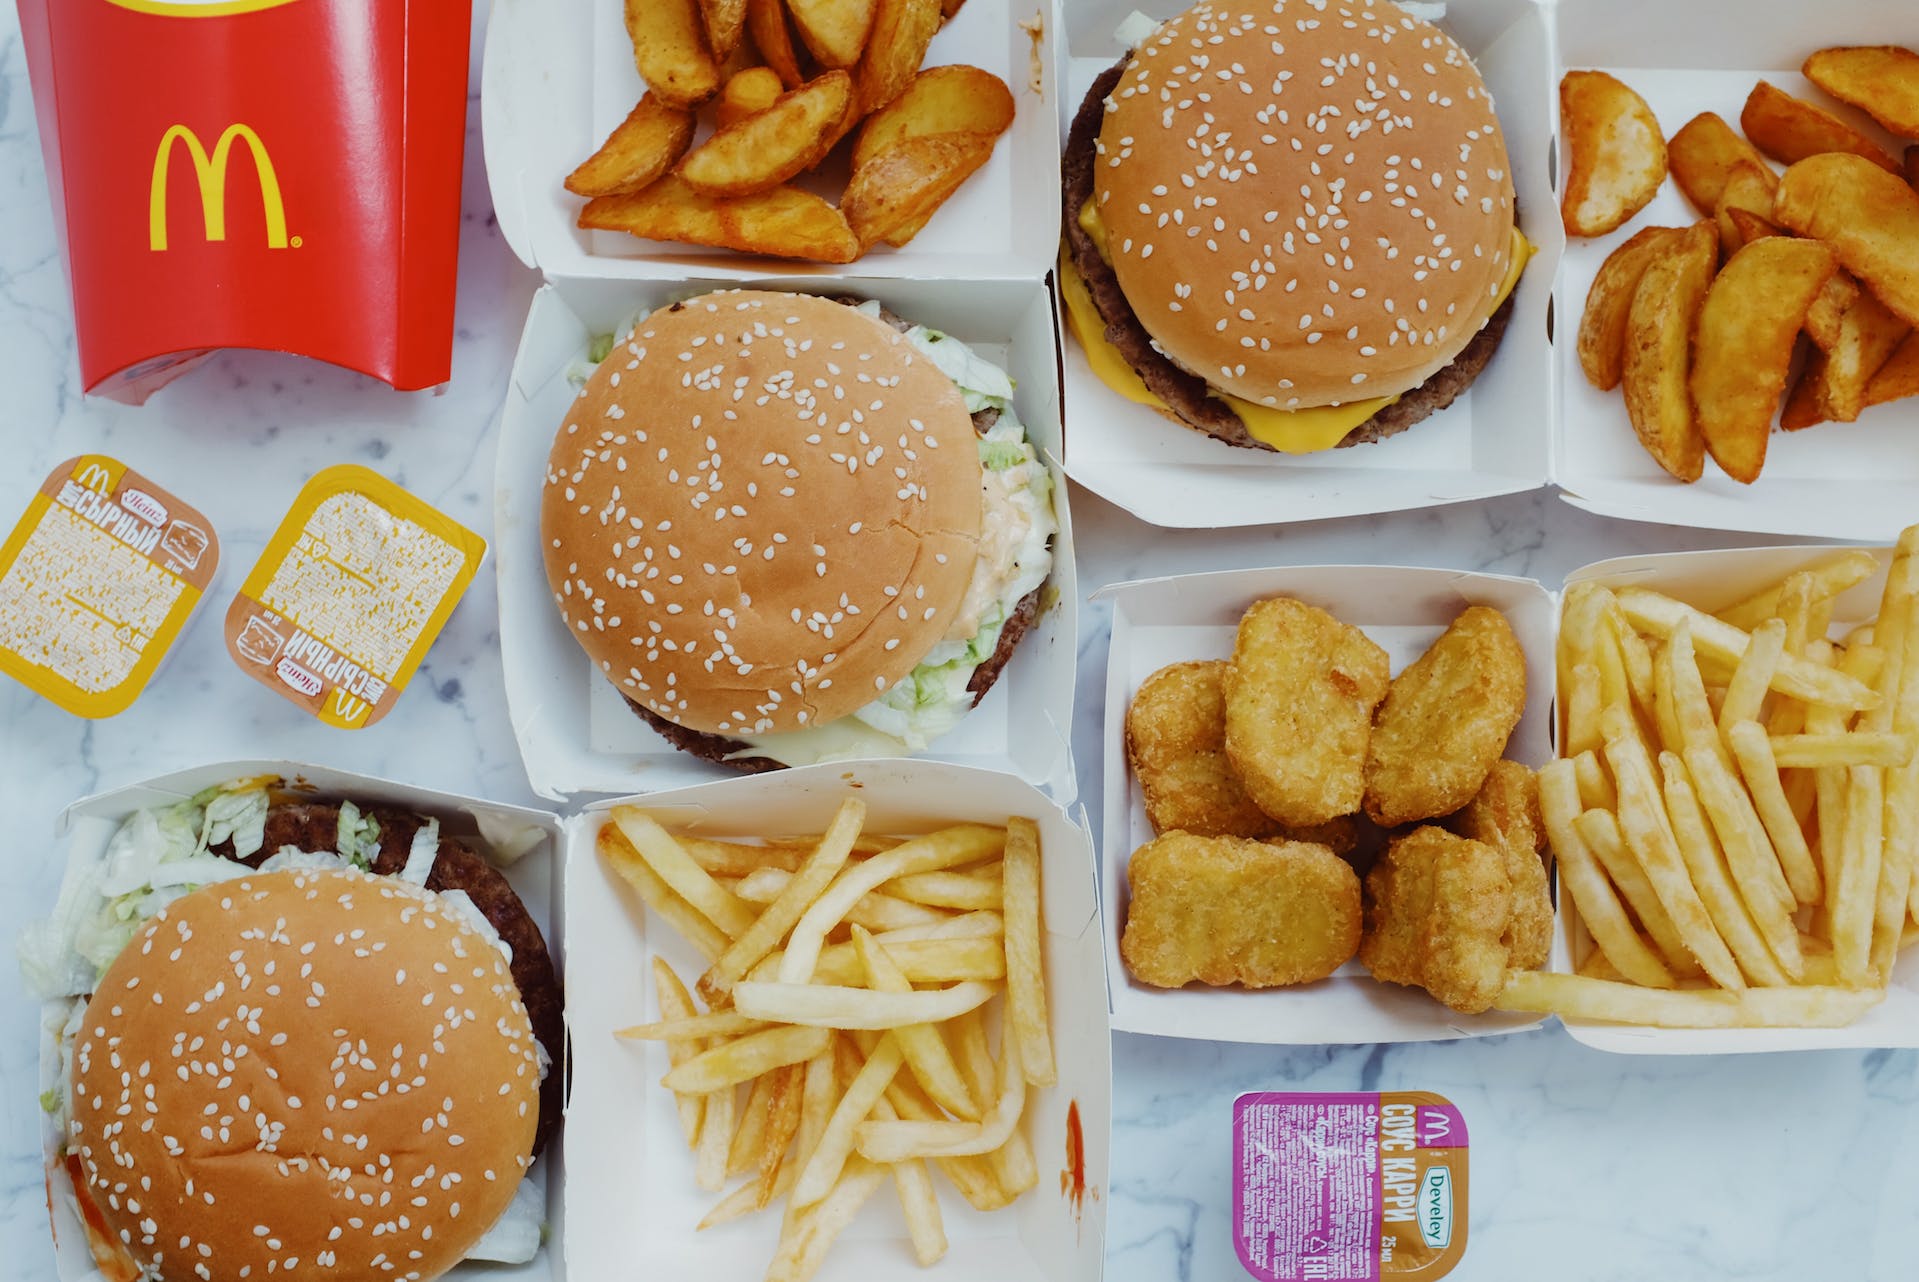 Nourriture de McDonald's | Source : Pexels